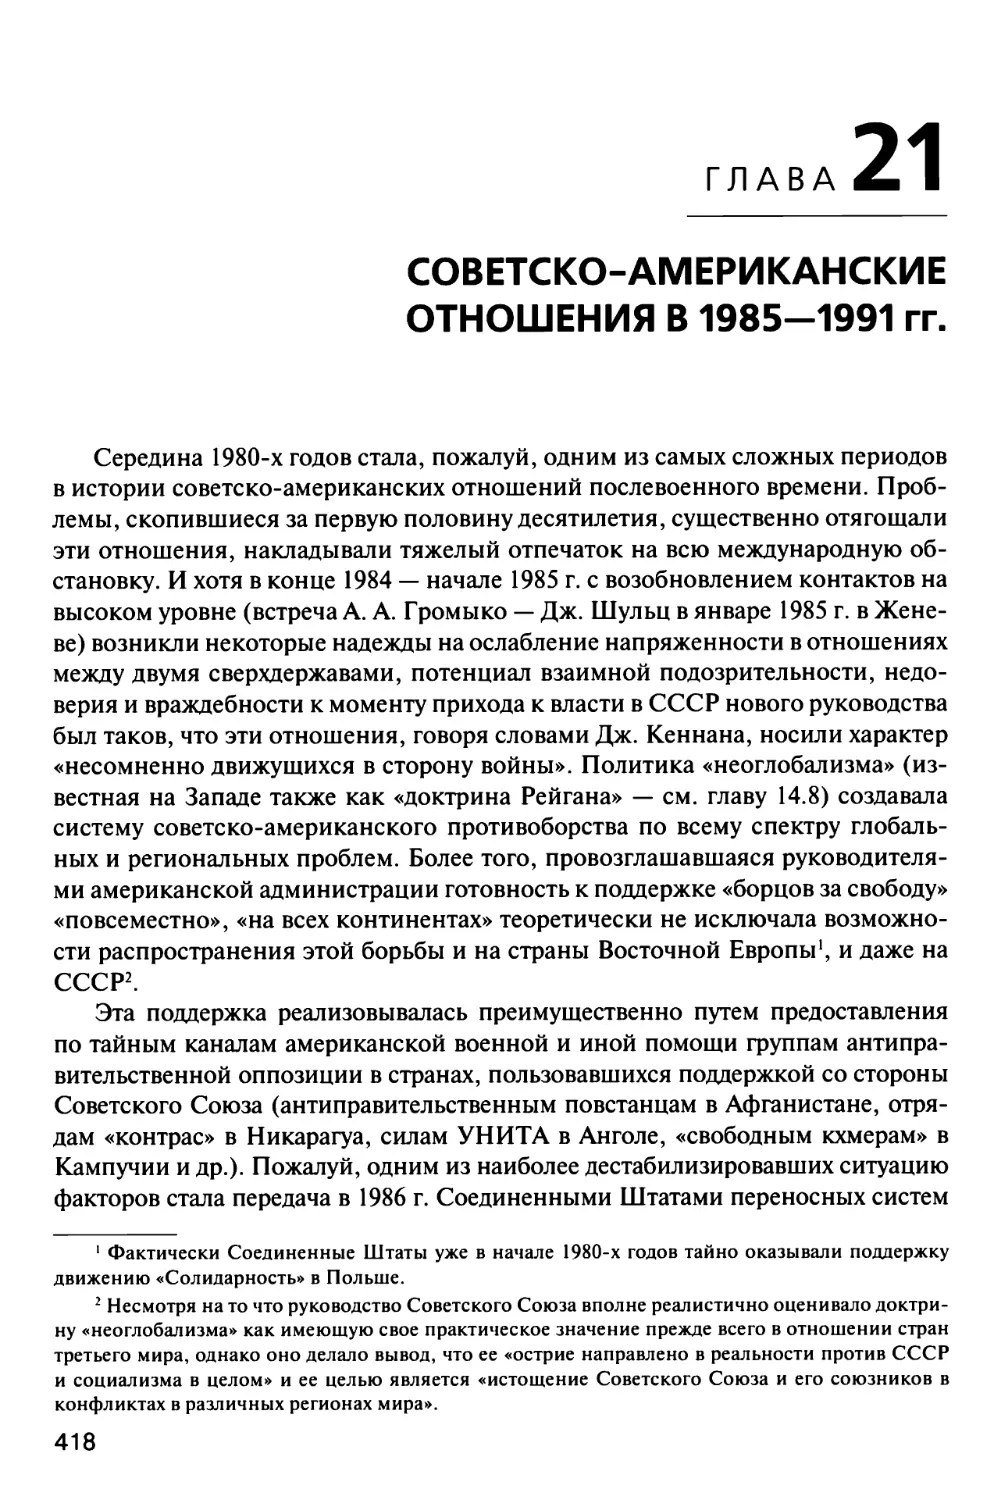 Глава 21. СОВЕТСКО-АМЕРИКАНСКИЕ ОТНОШЕНИЯ В 1985-1991 гг.